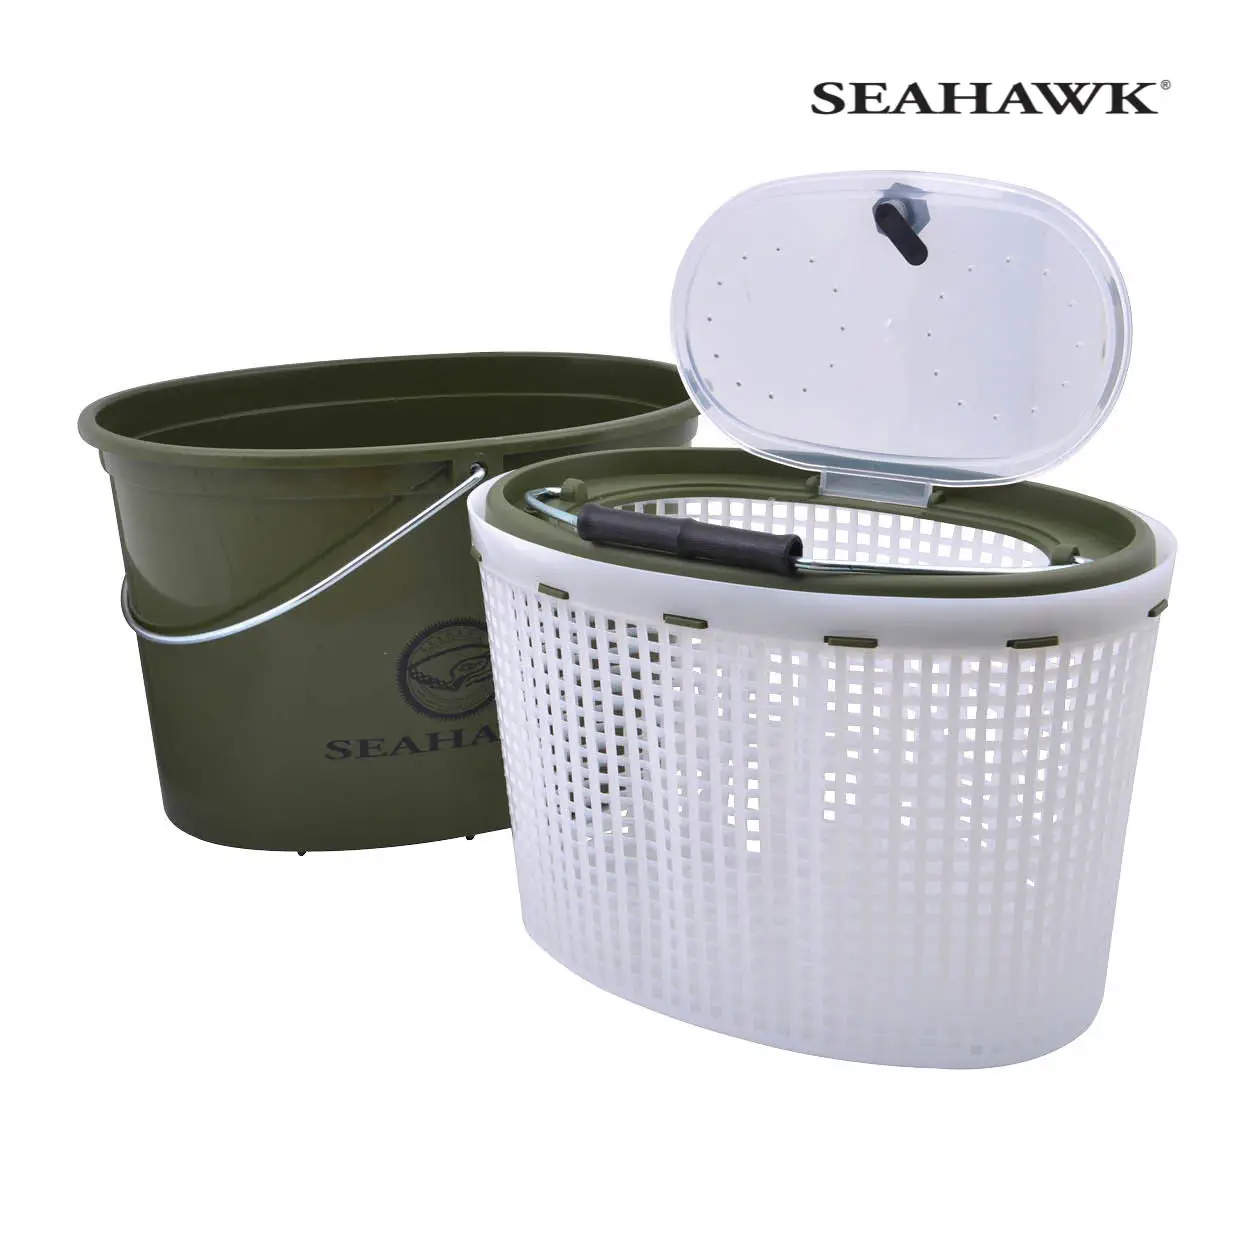 Seahawk Accessories - Tackle Box / Bags - Live Bait Box